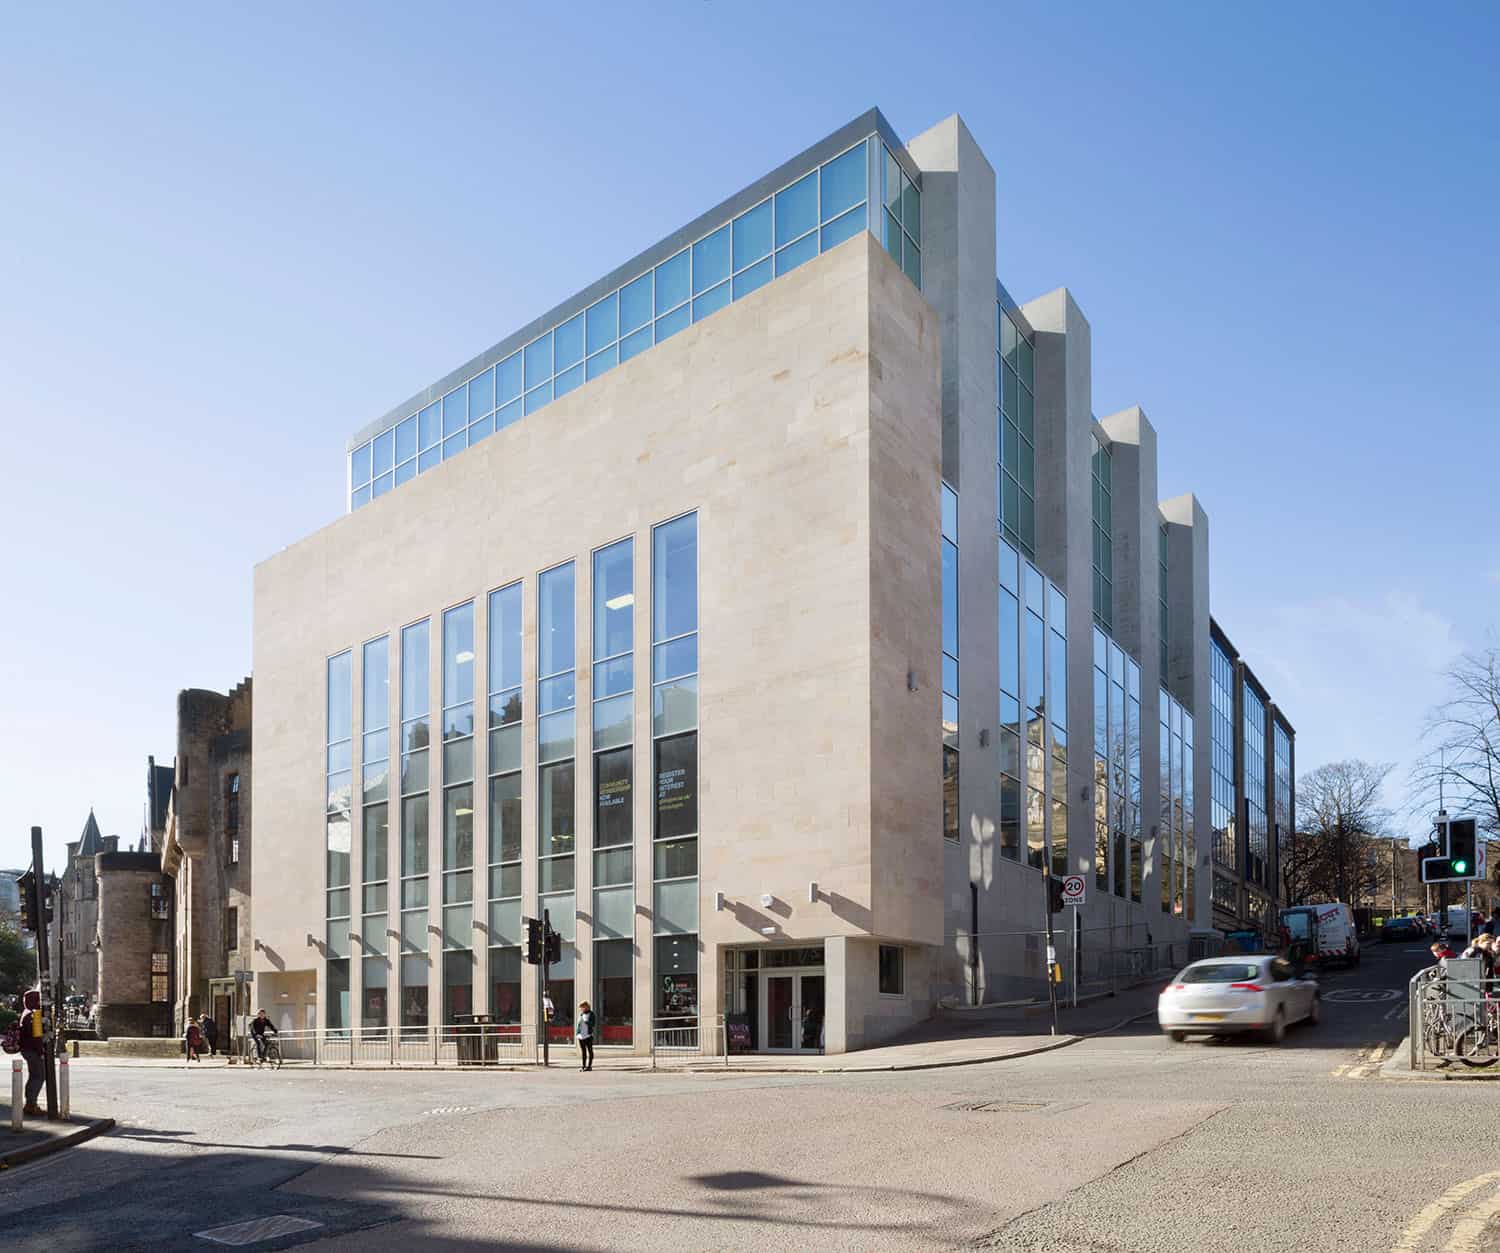 University of Glasgow Stevenson HIVE building: an award winning sustainable design for Higher Education